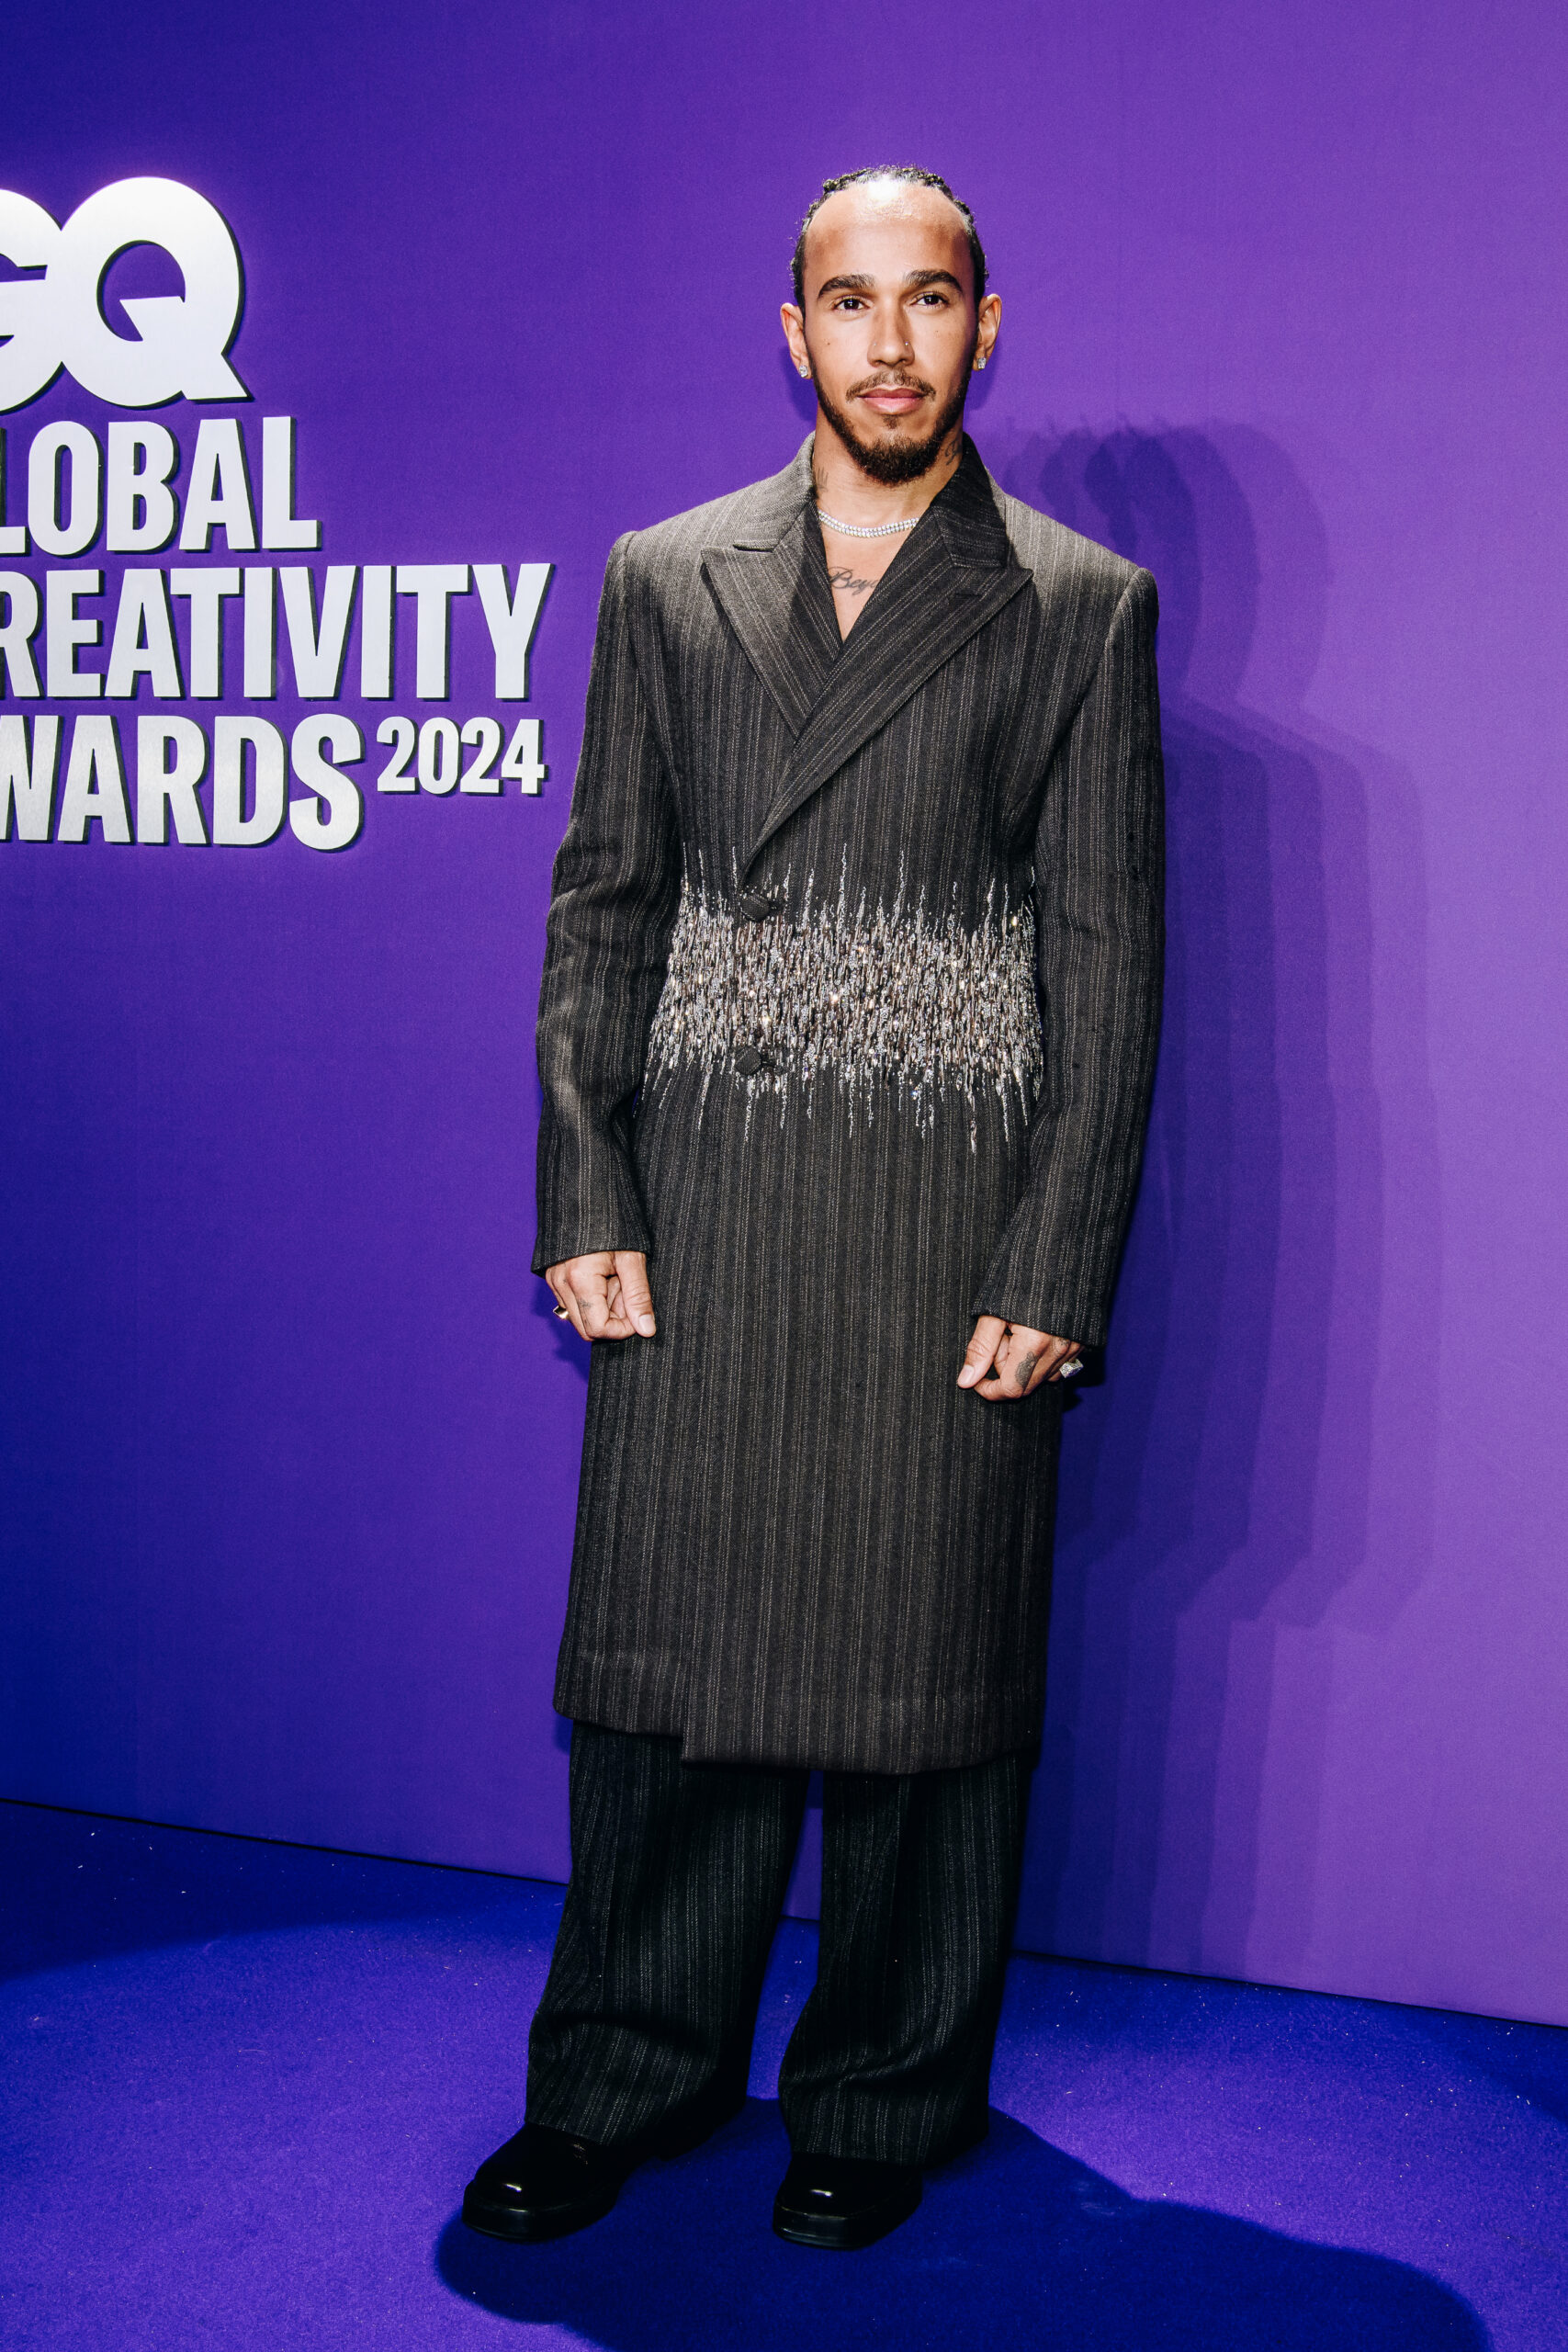 Lewis Hamilton Dazzles in Dior at GQ Global Creativity Awards 2024